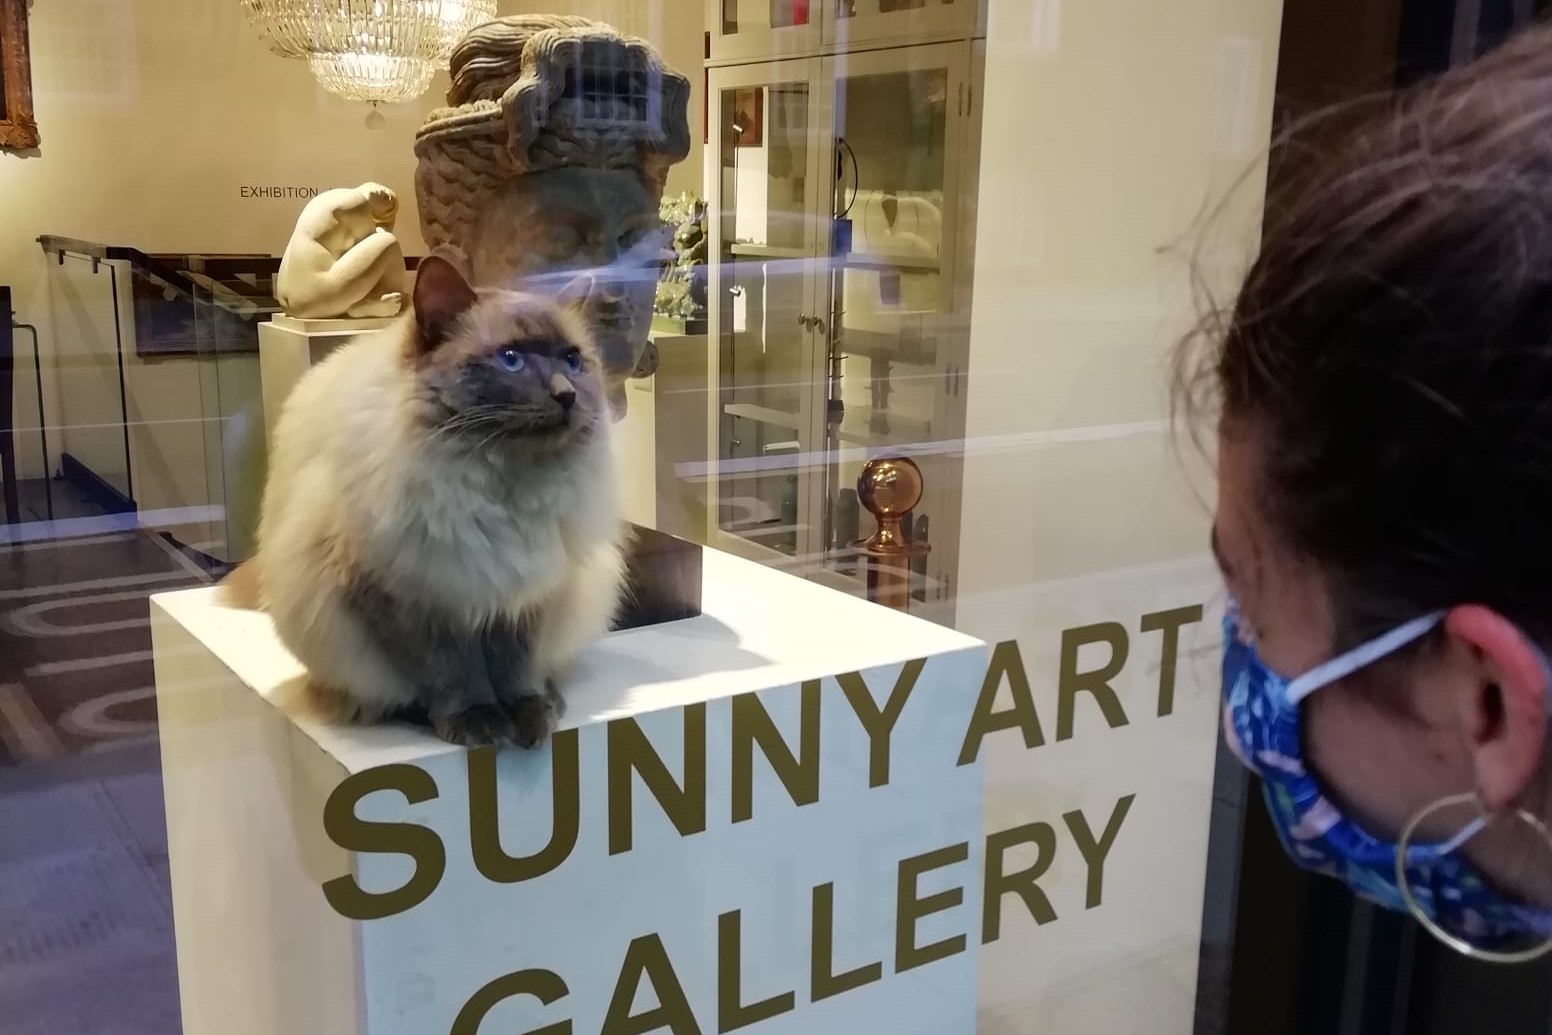 Sunny Art Gallery